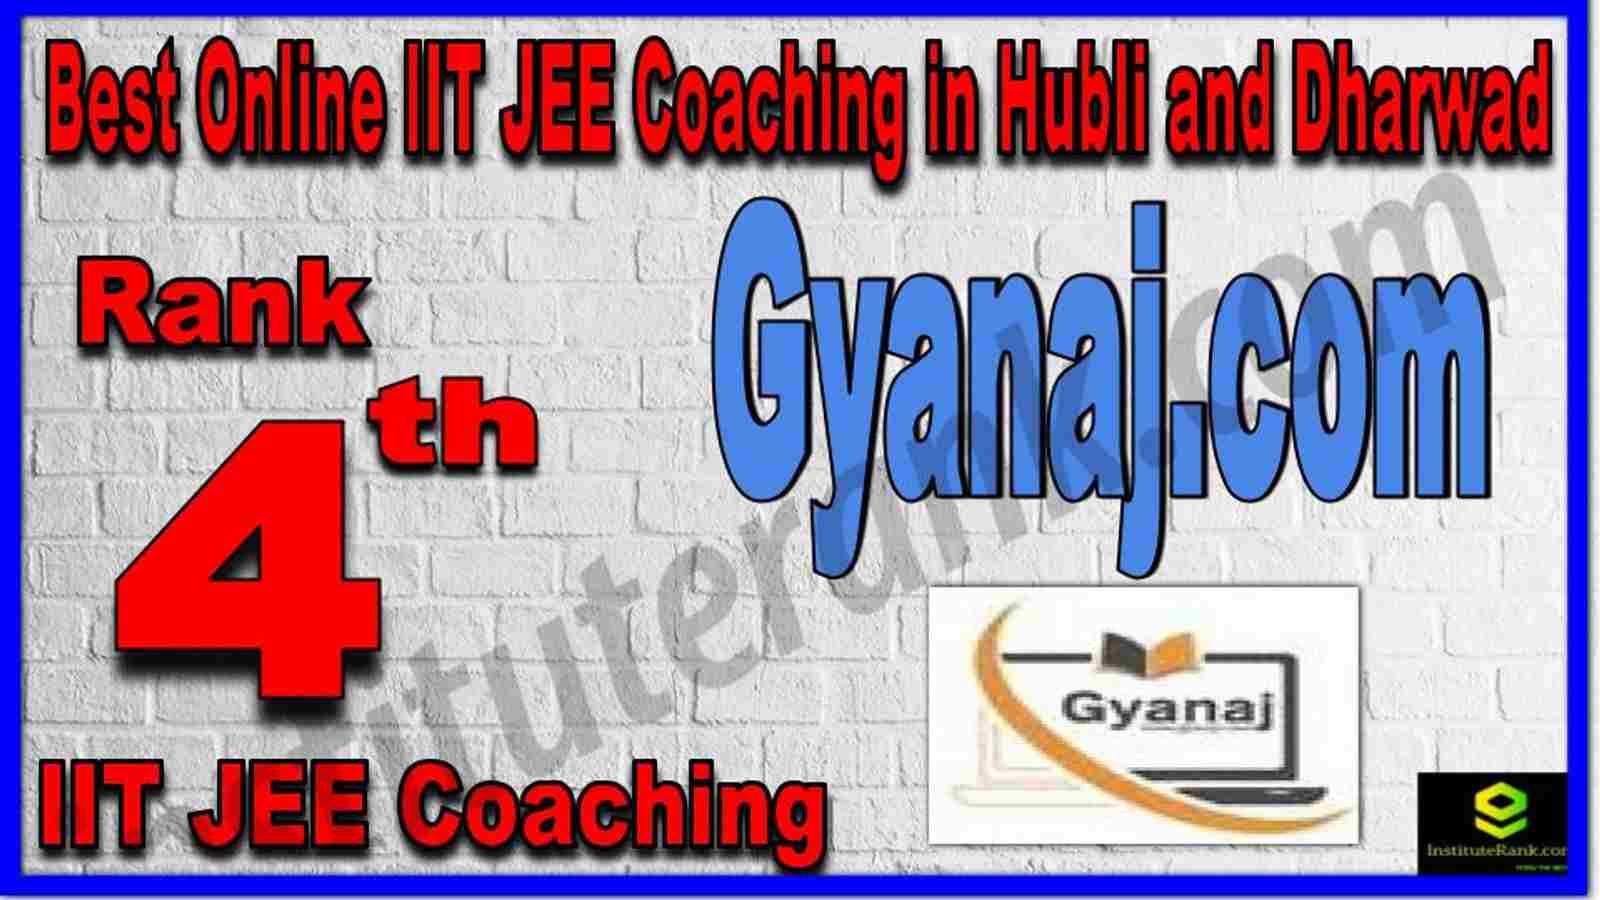 Rank 4th Best Online IIT JEE Coaching in Hubli and Dharwad